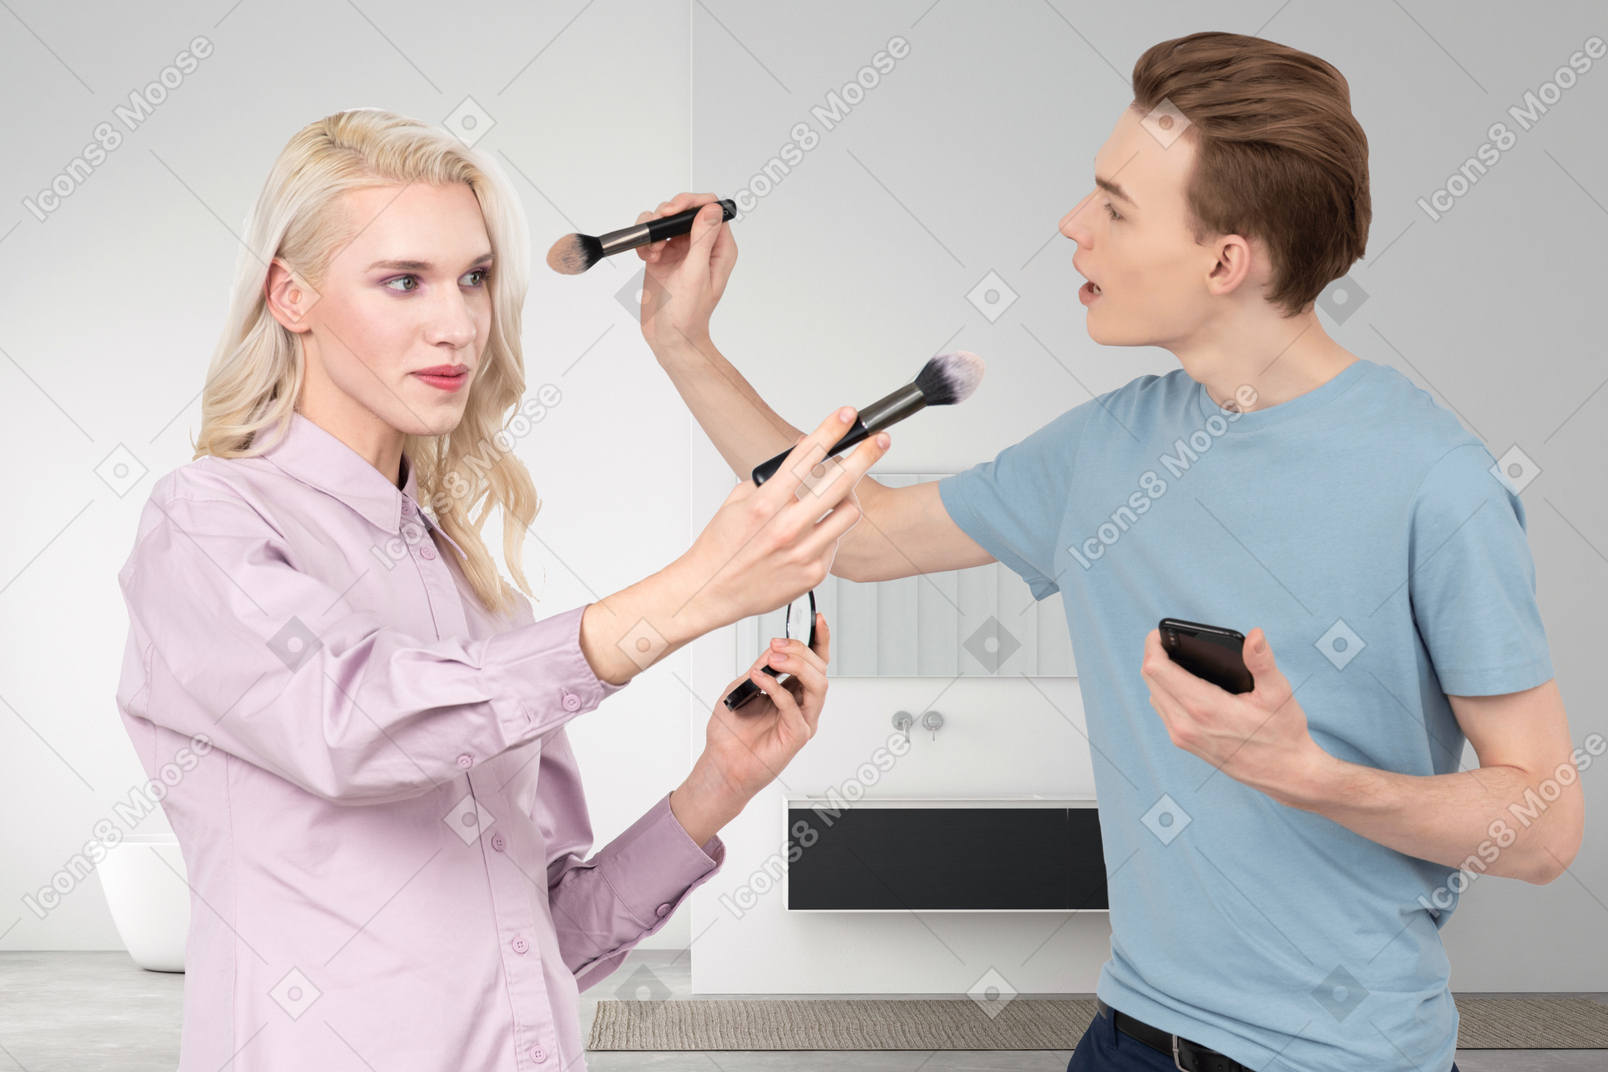 Men doing each other's makeup